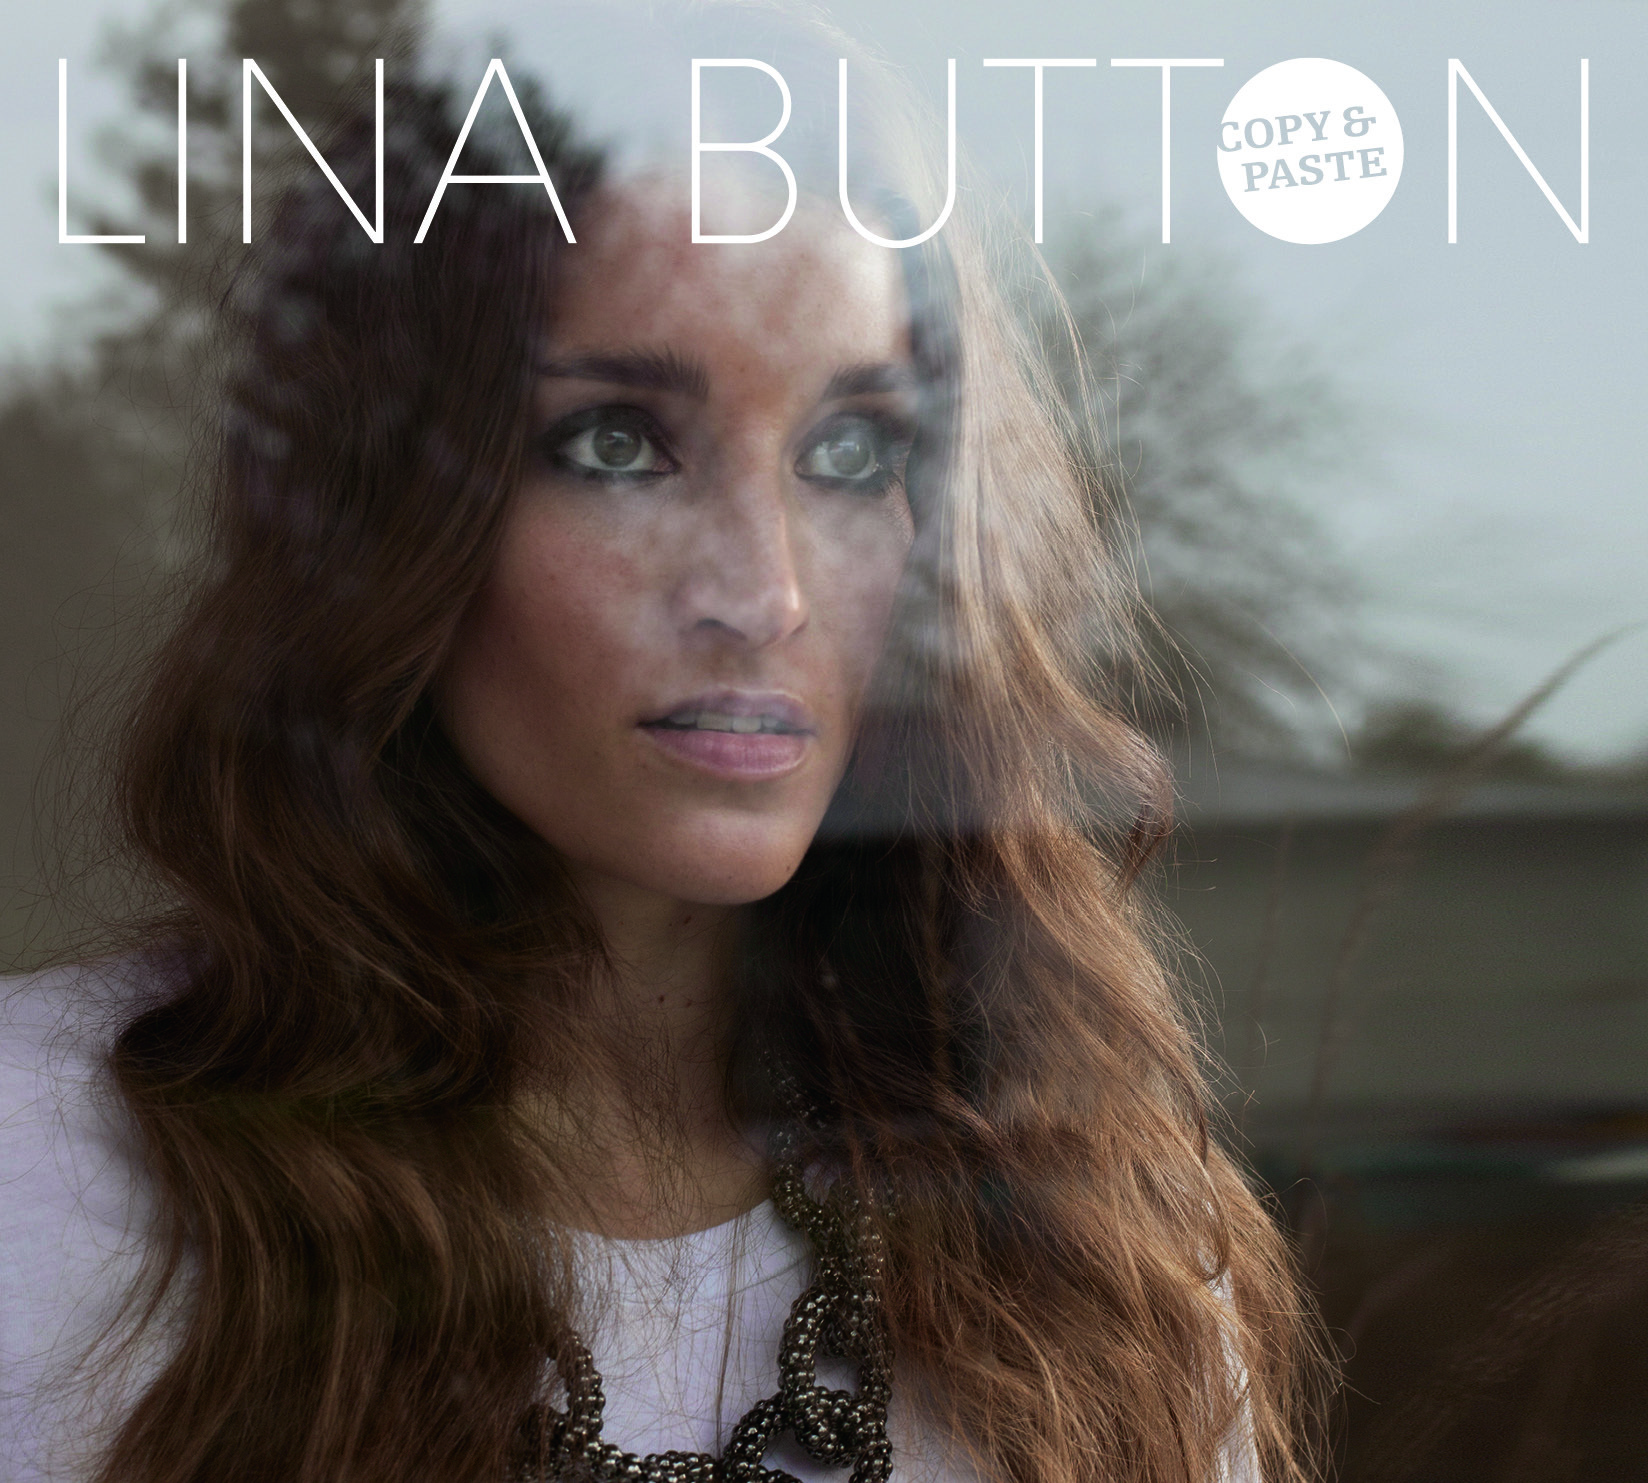 2013 - Lina Button - Copy & Paste